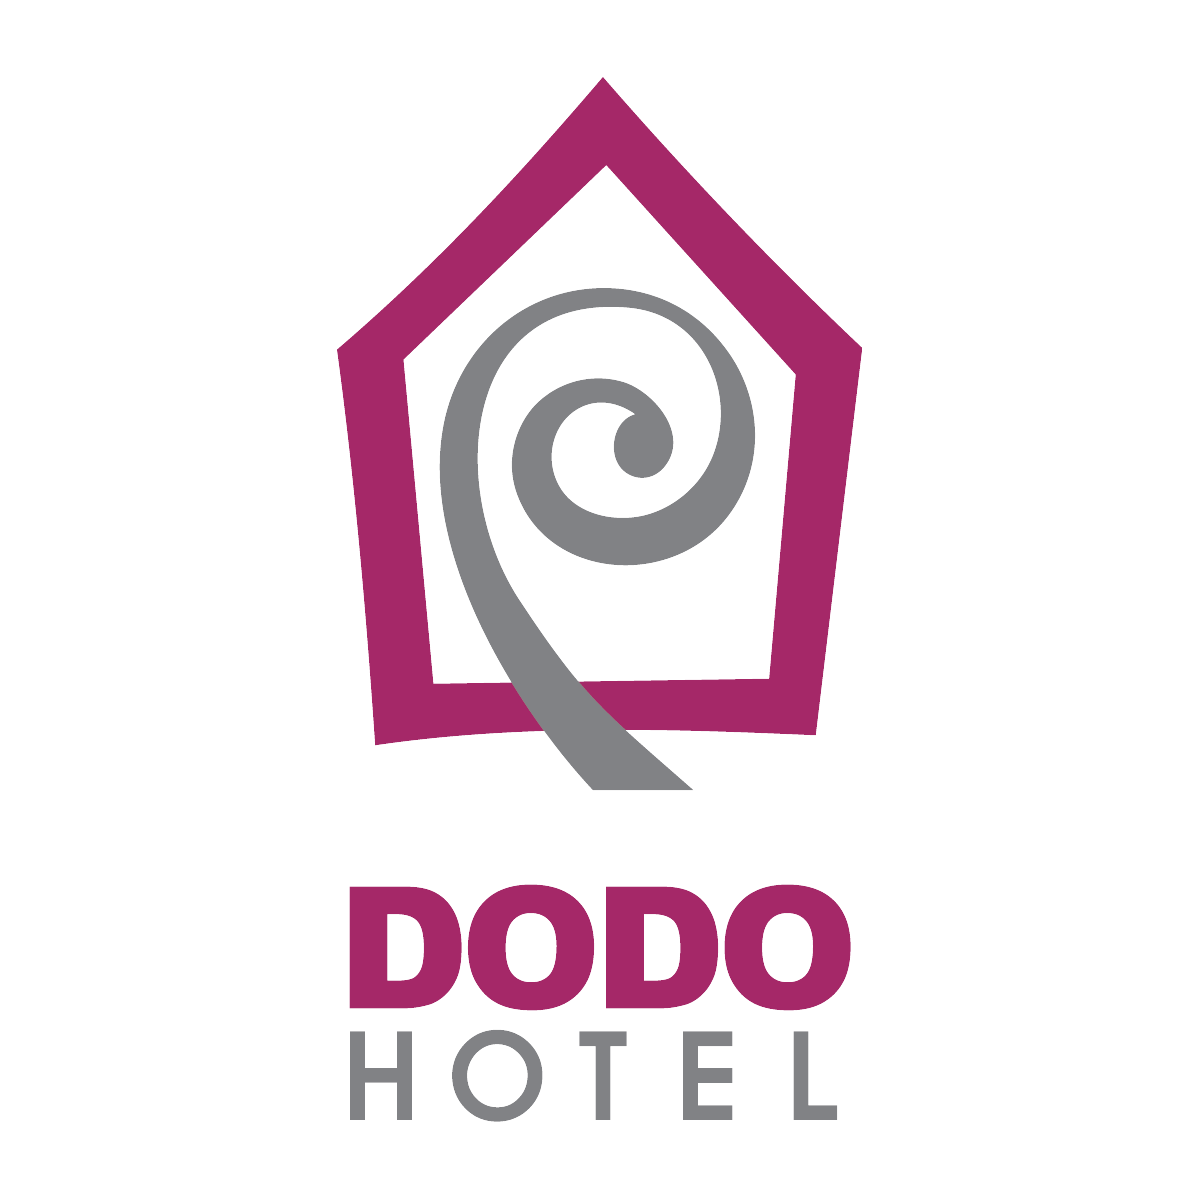 Dodo Hotel logo